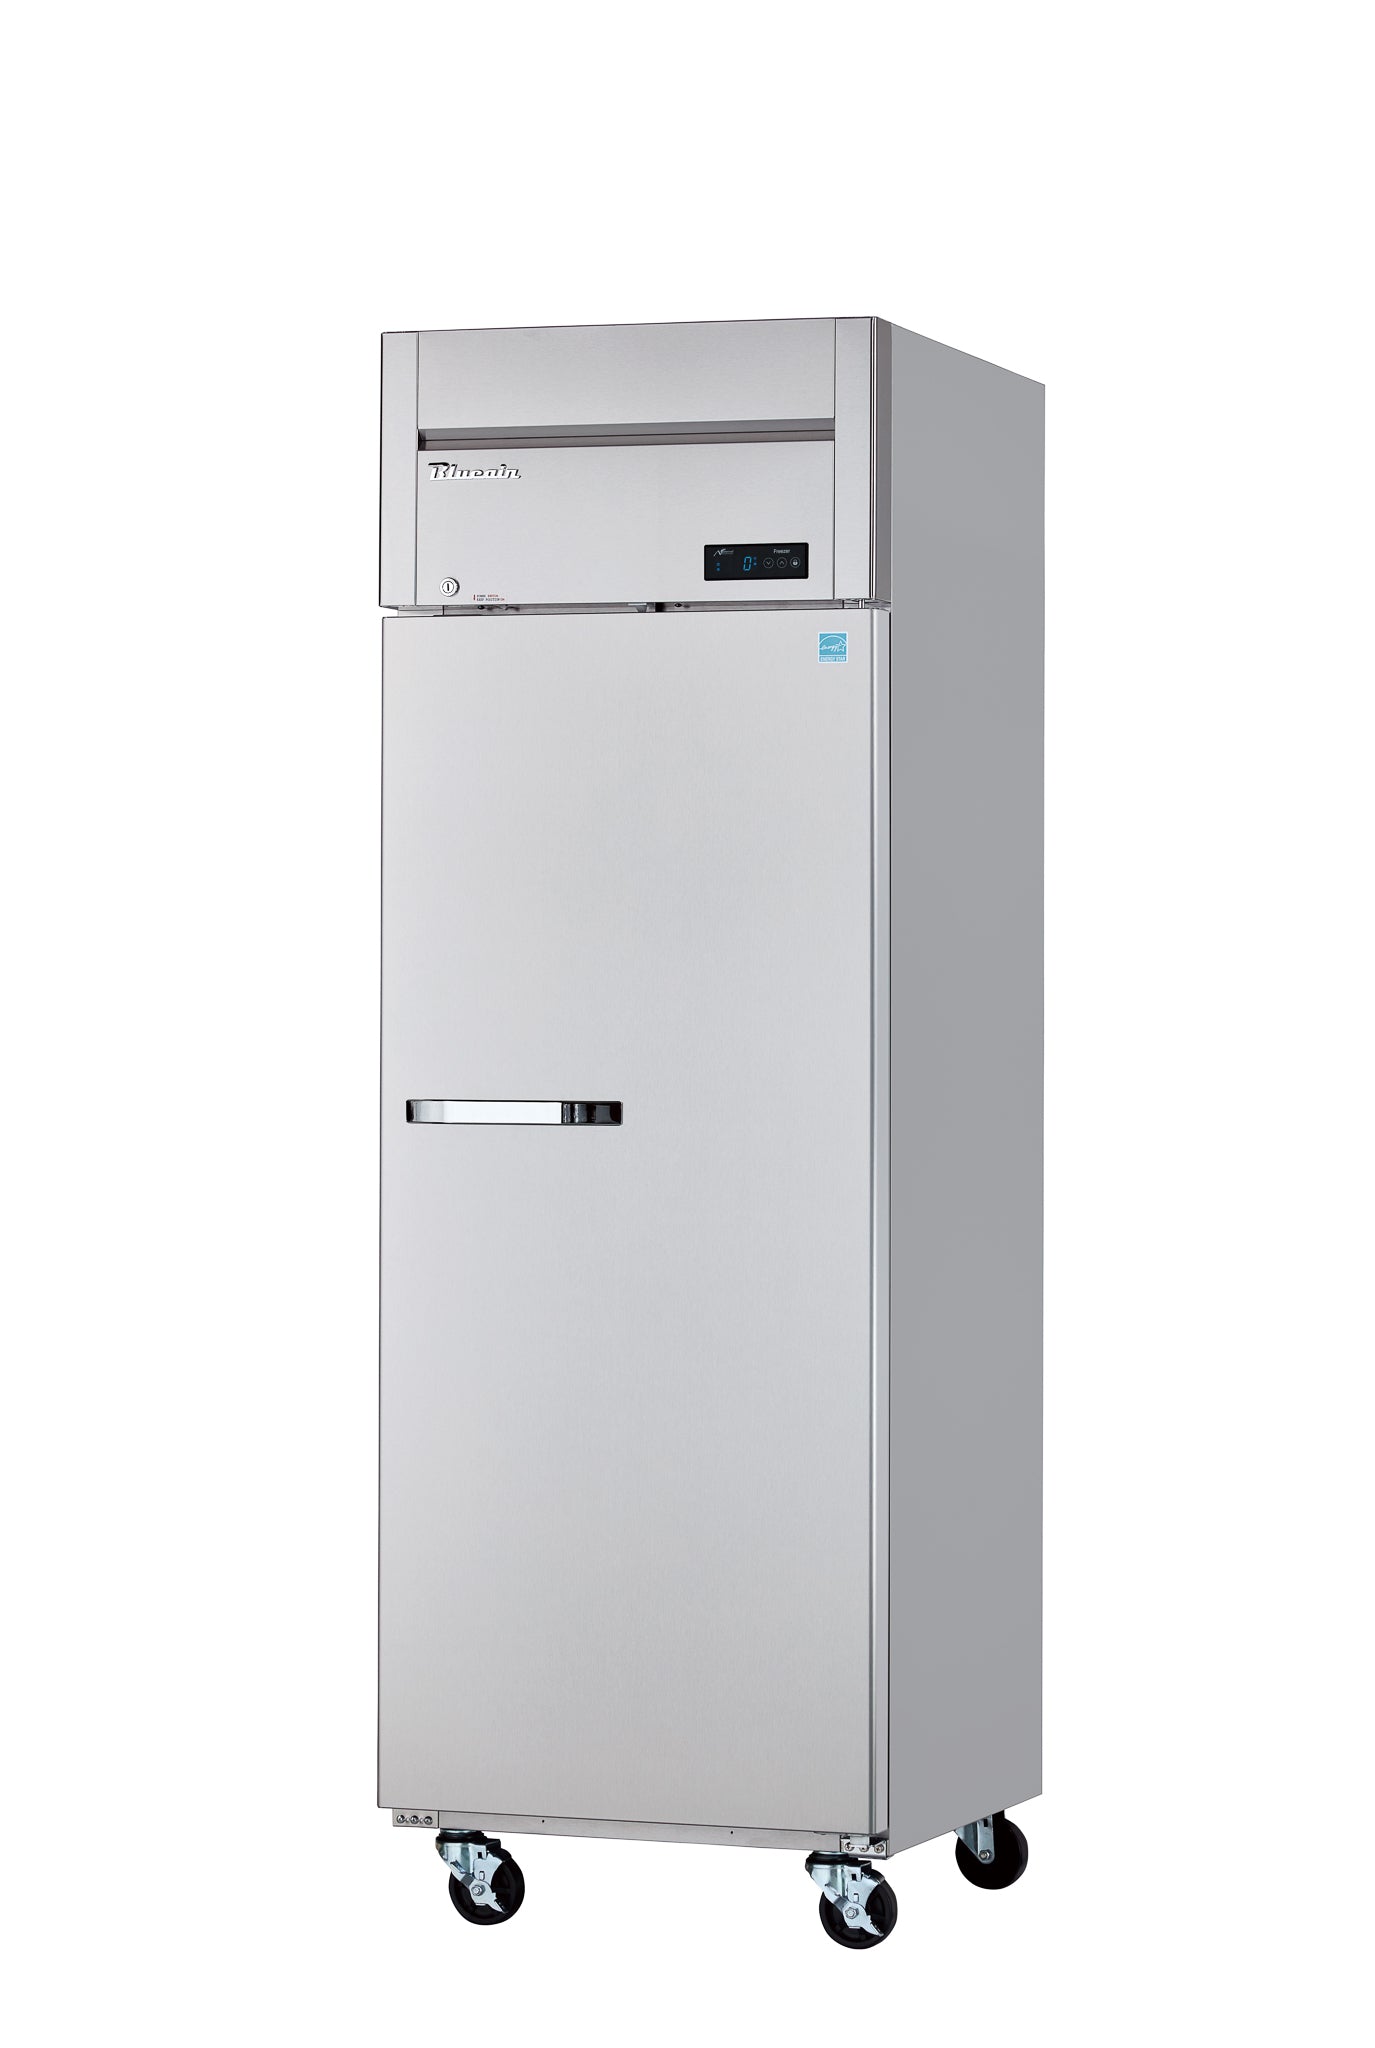 Blue Air - BSF23T-HC, 1 Solid Door Stainless Freezer, Top-Mount Compressor, R-290 Refrigerant